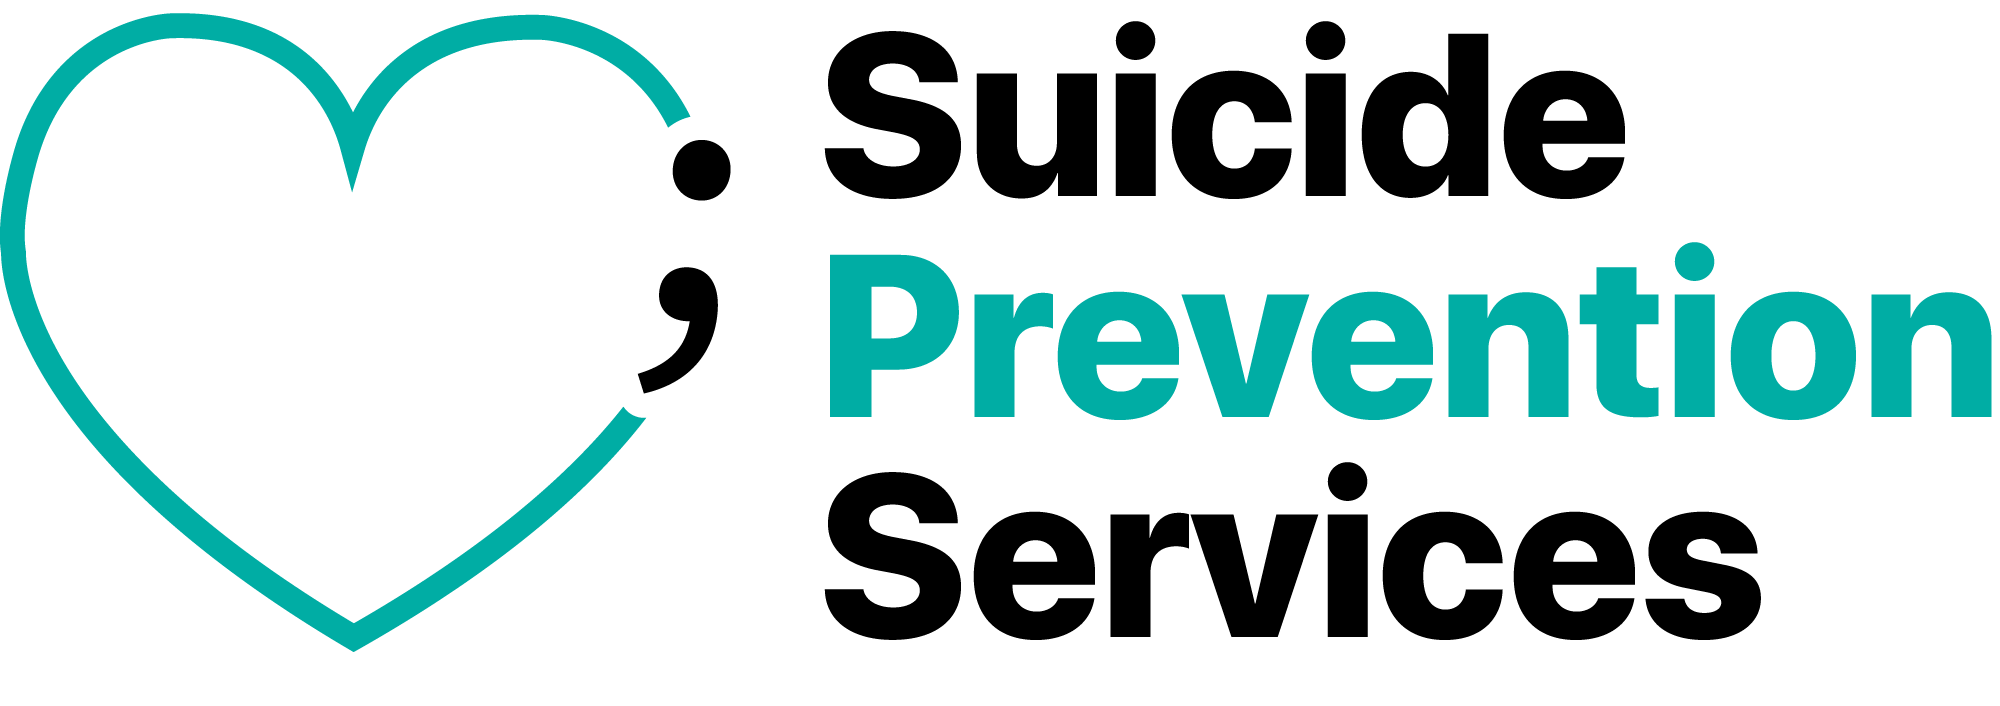 suicide prevention full logo